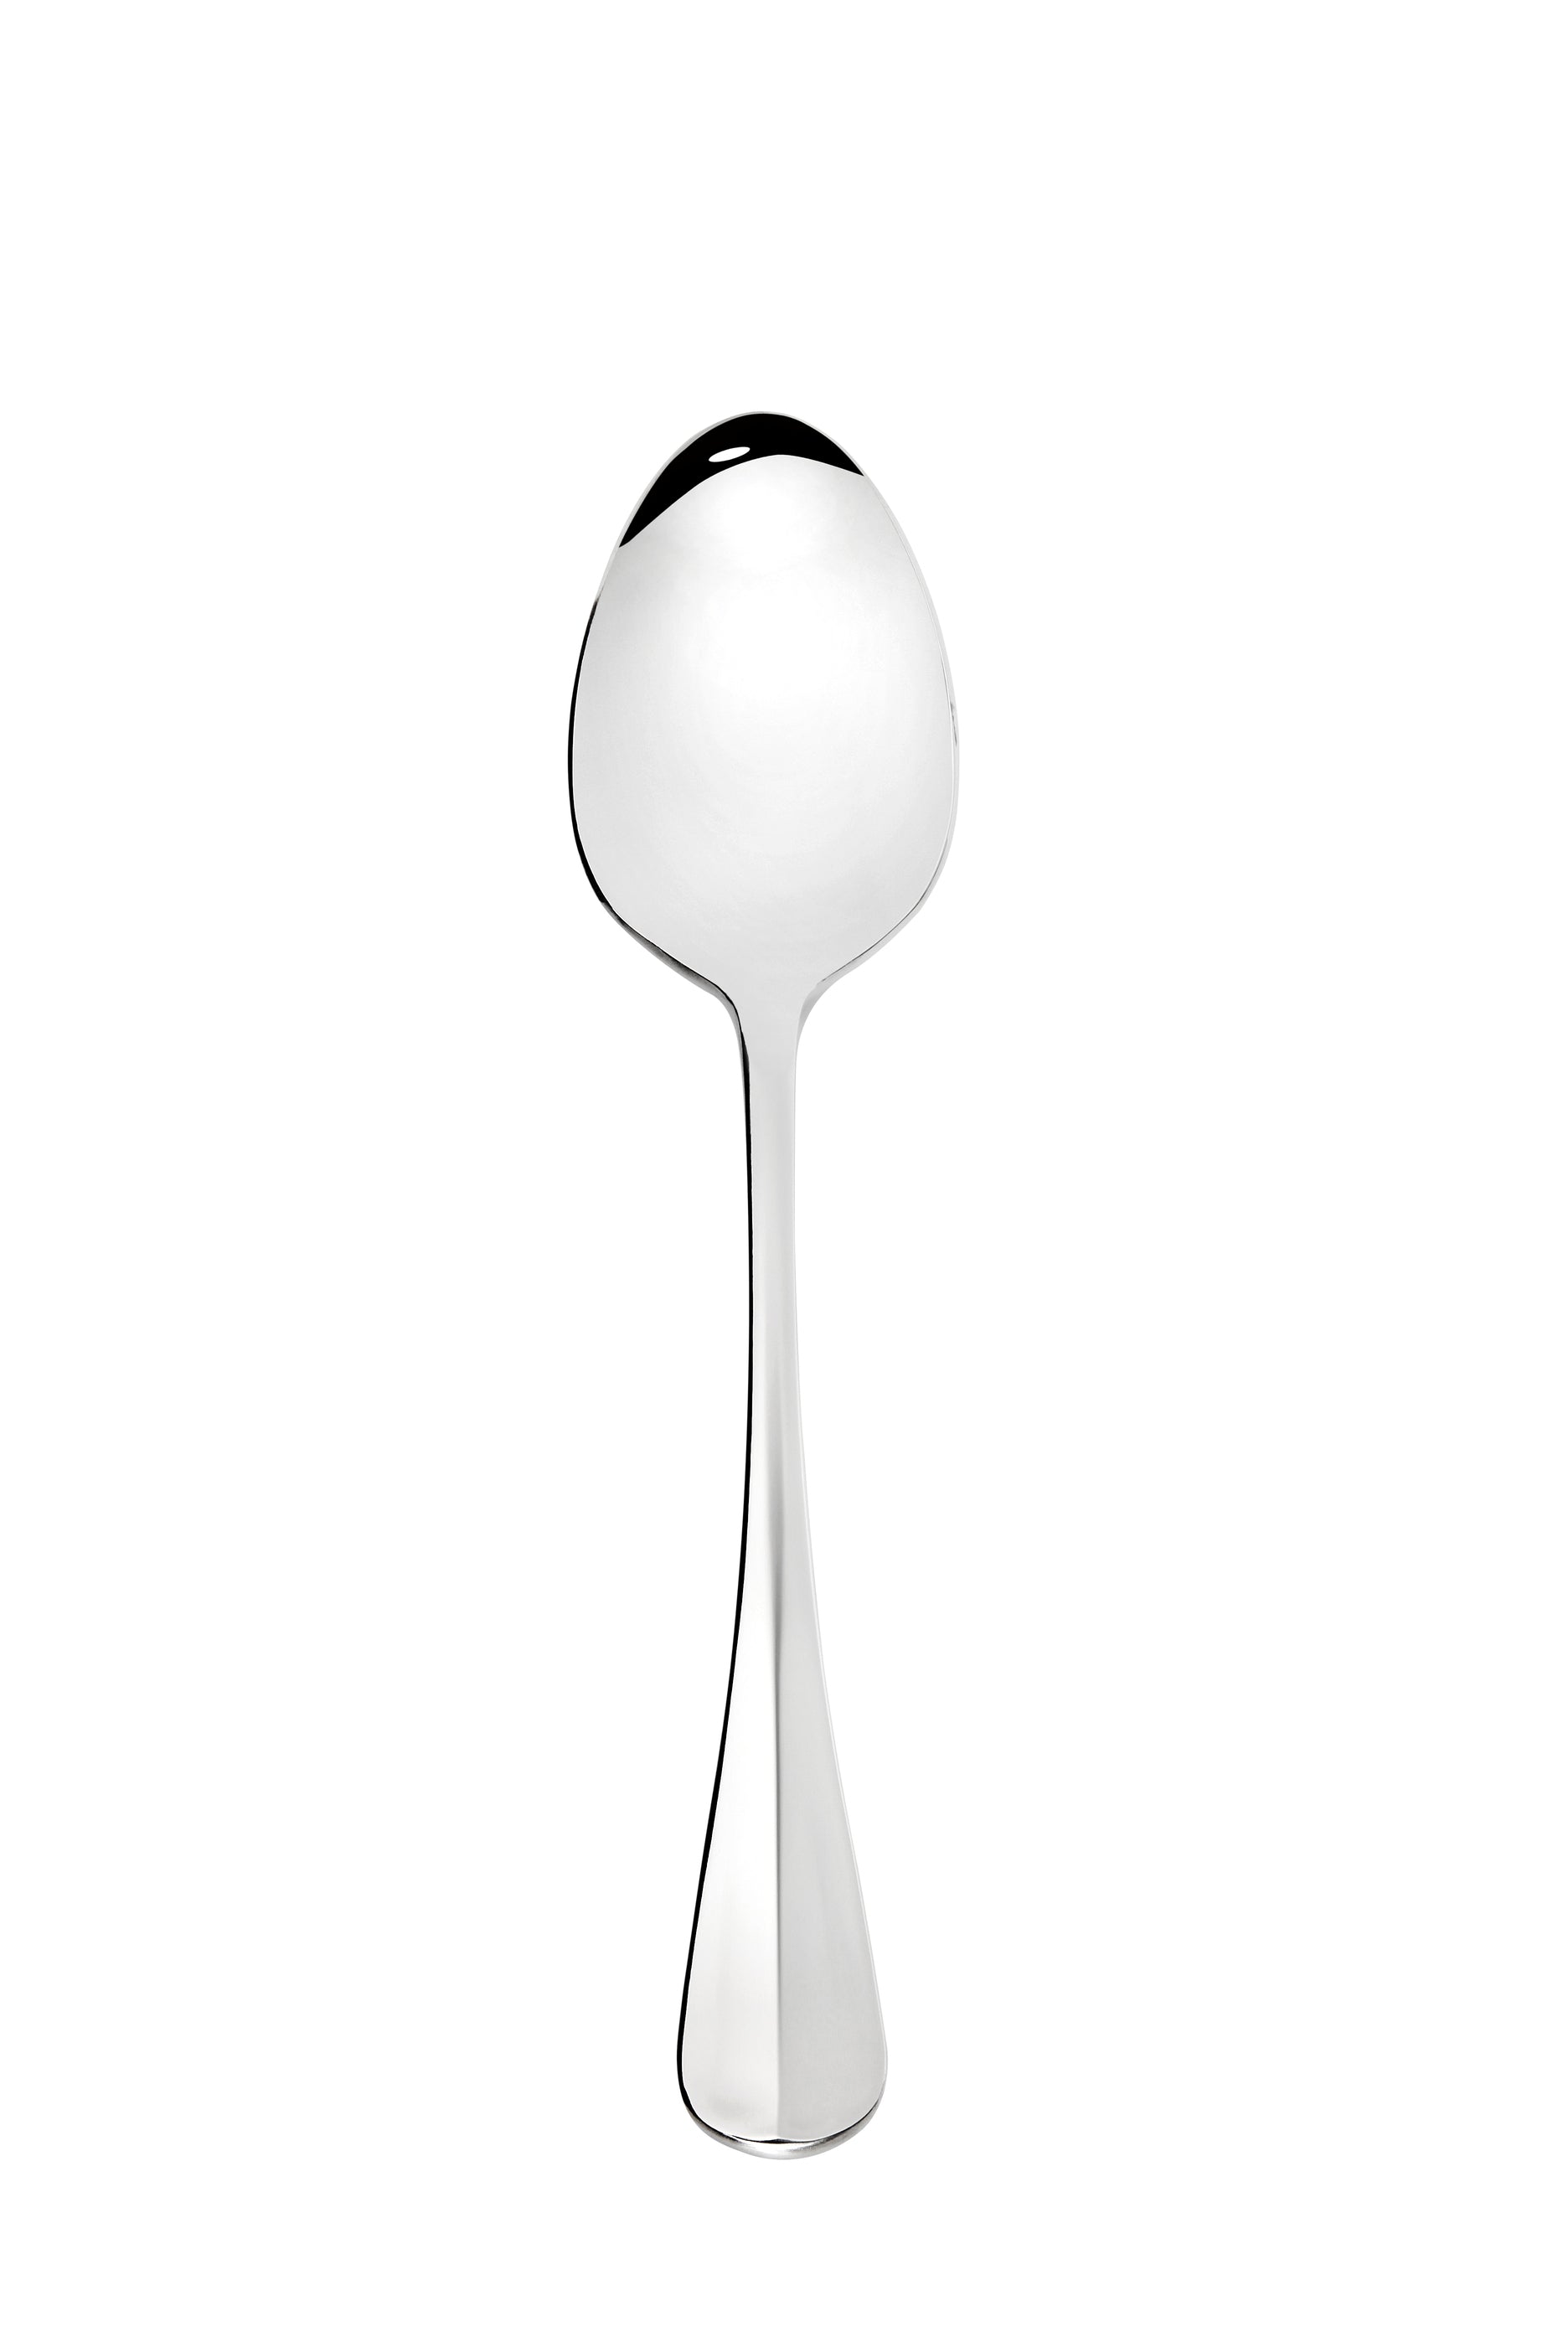 Stanley Rogers Baguette 18/10 Stainless Steel desset spoon